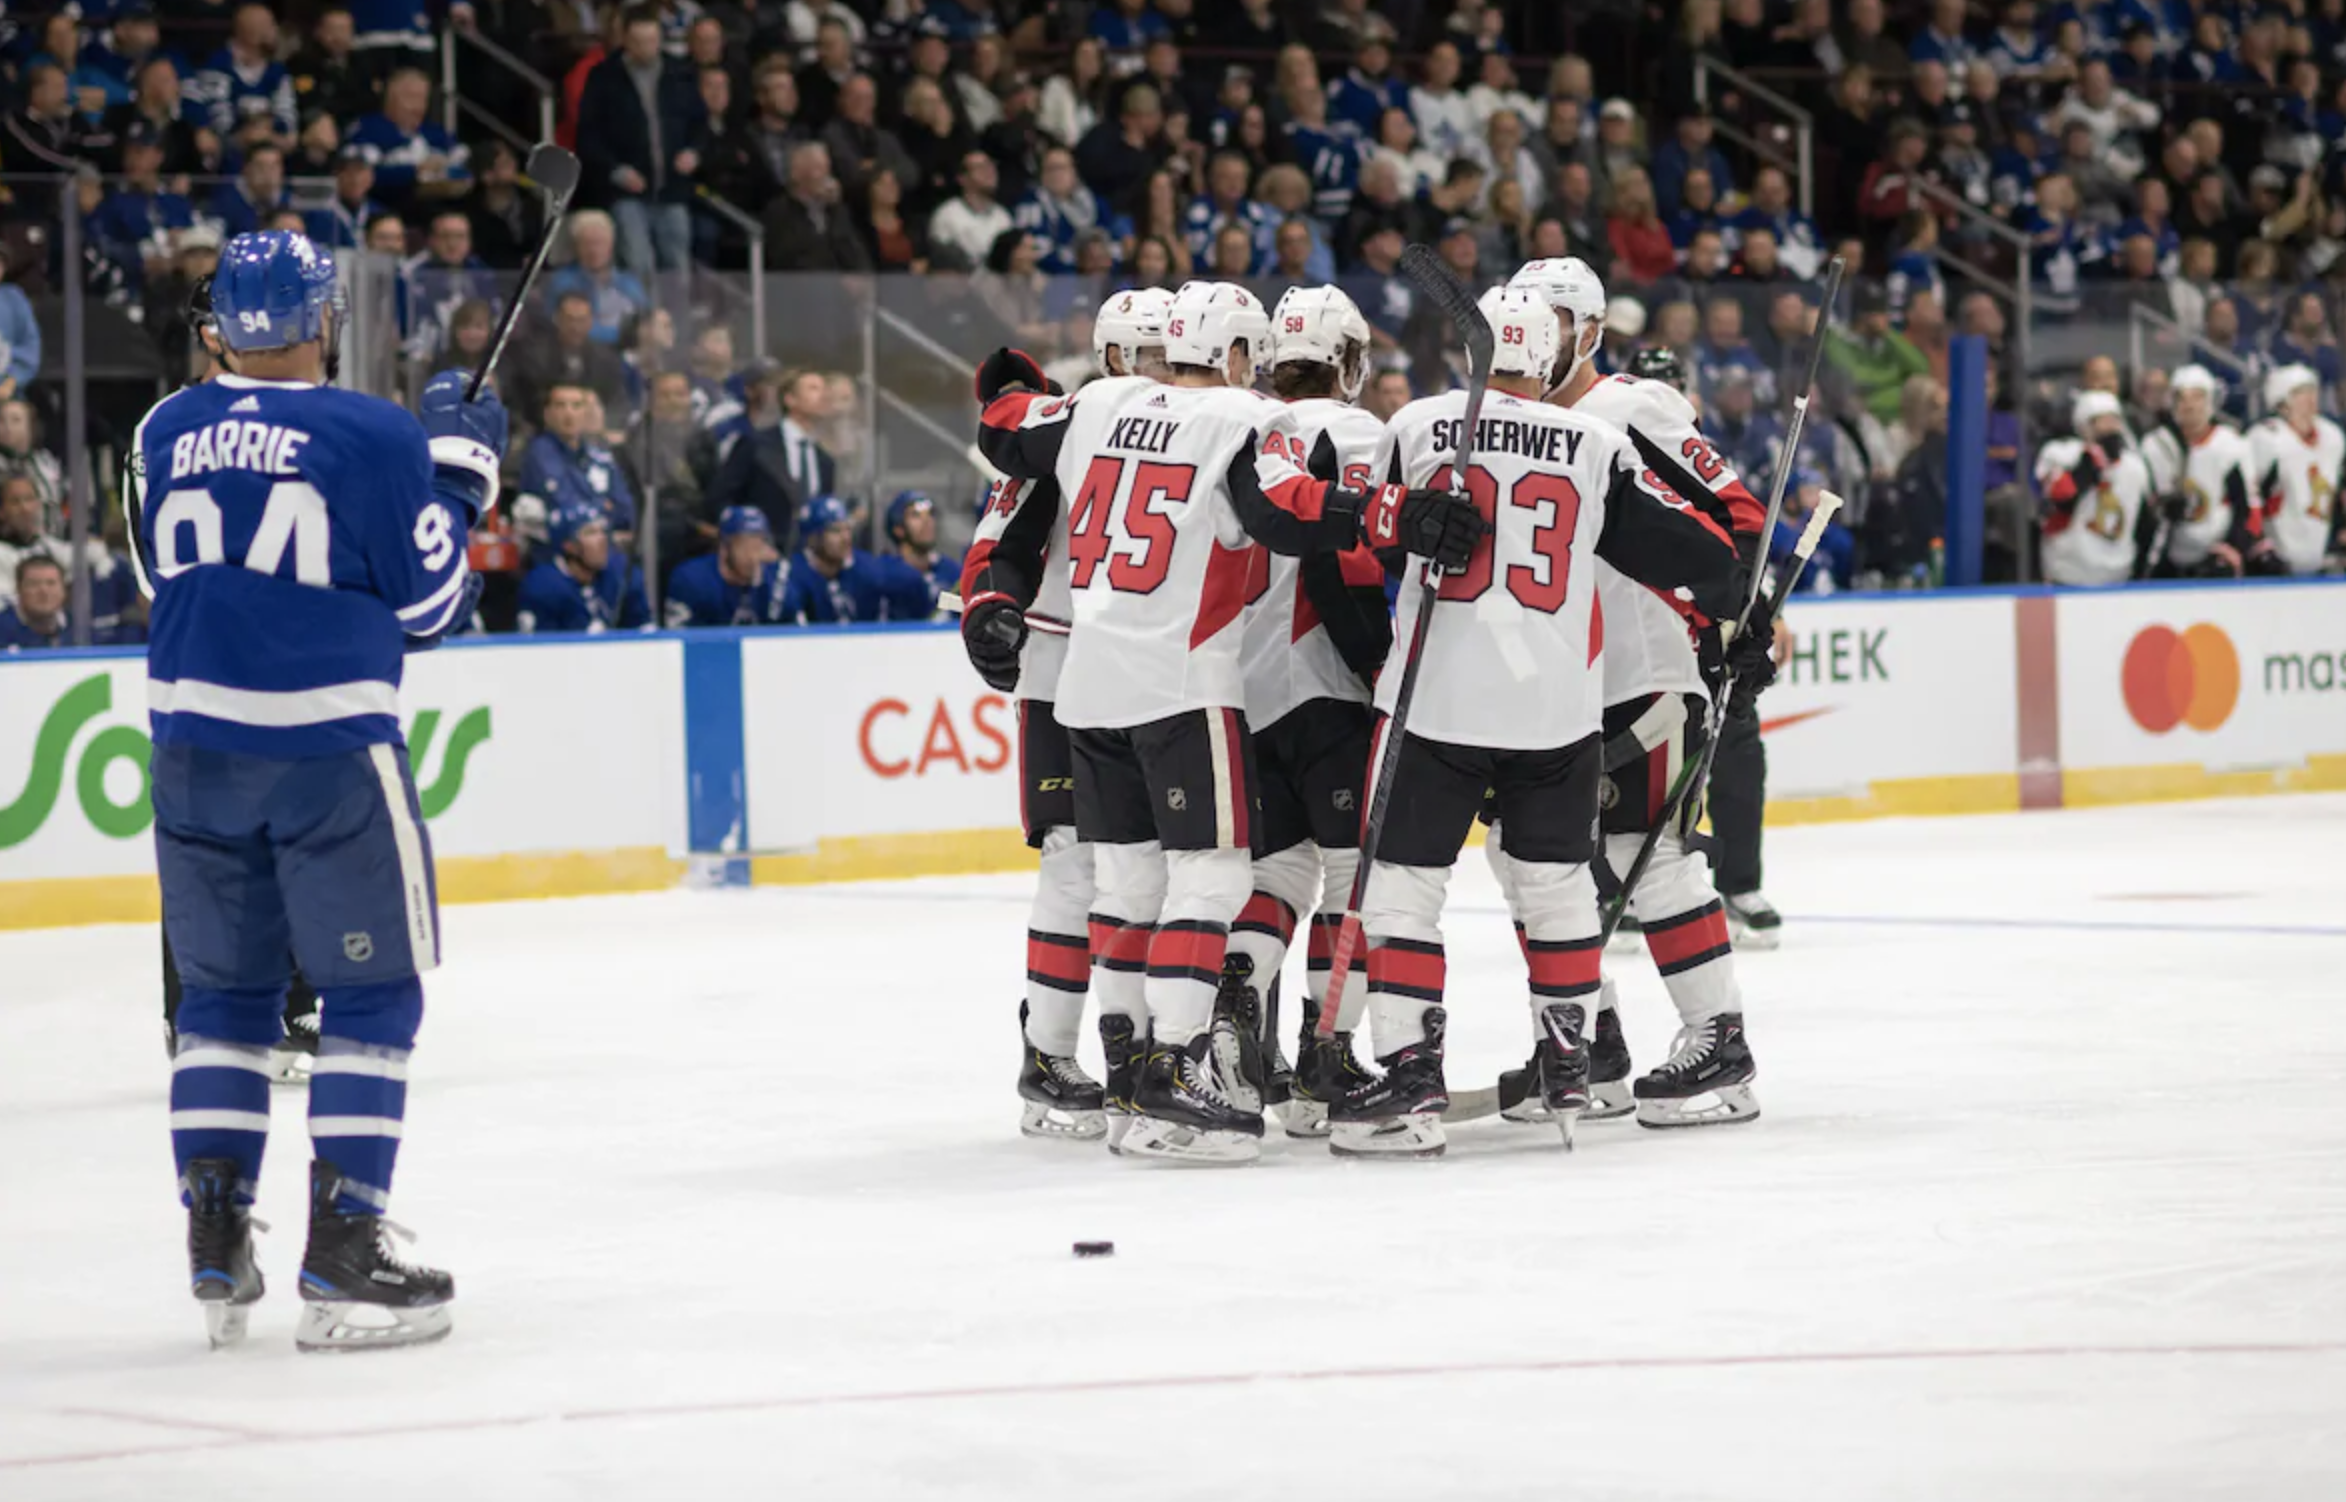 Toronto Maple Leafs vs. Ottawa Senators, Preseason Game #1